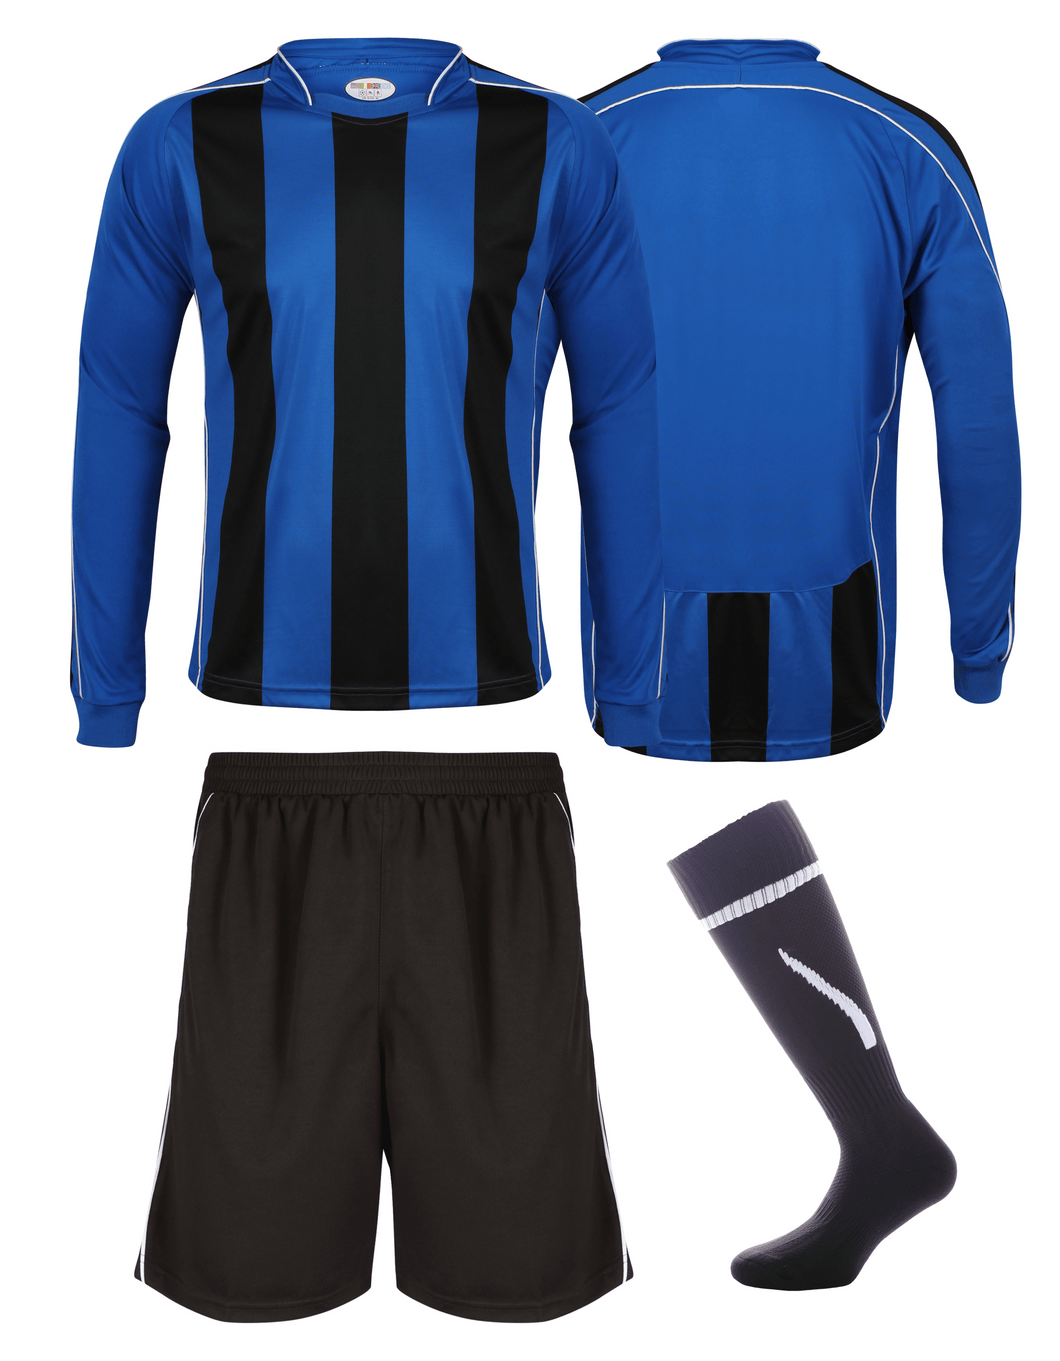 Adults Italia Football Kit Gazelle Sports UK Yes XS Col A) Royal Blue/ Black/ White